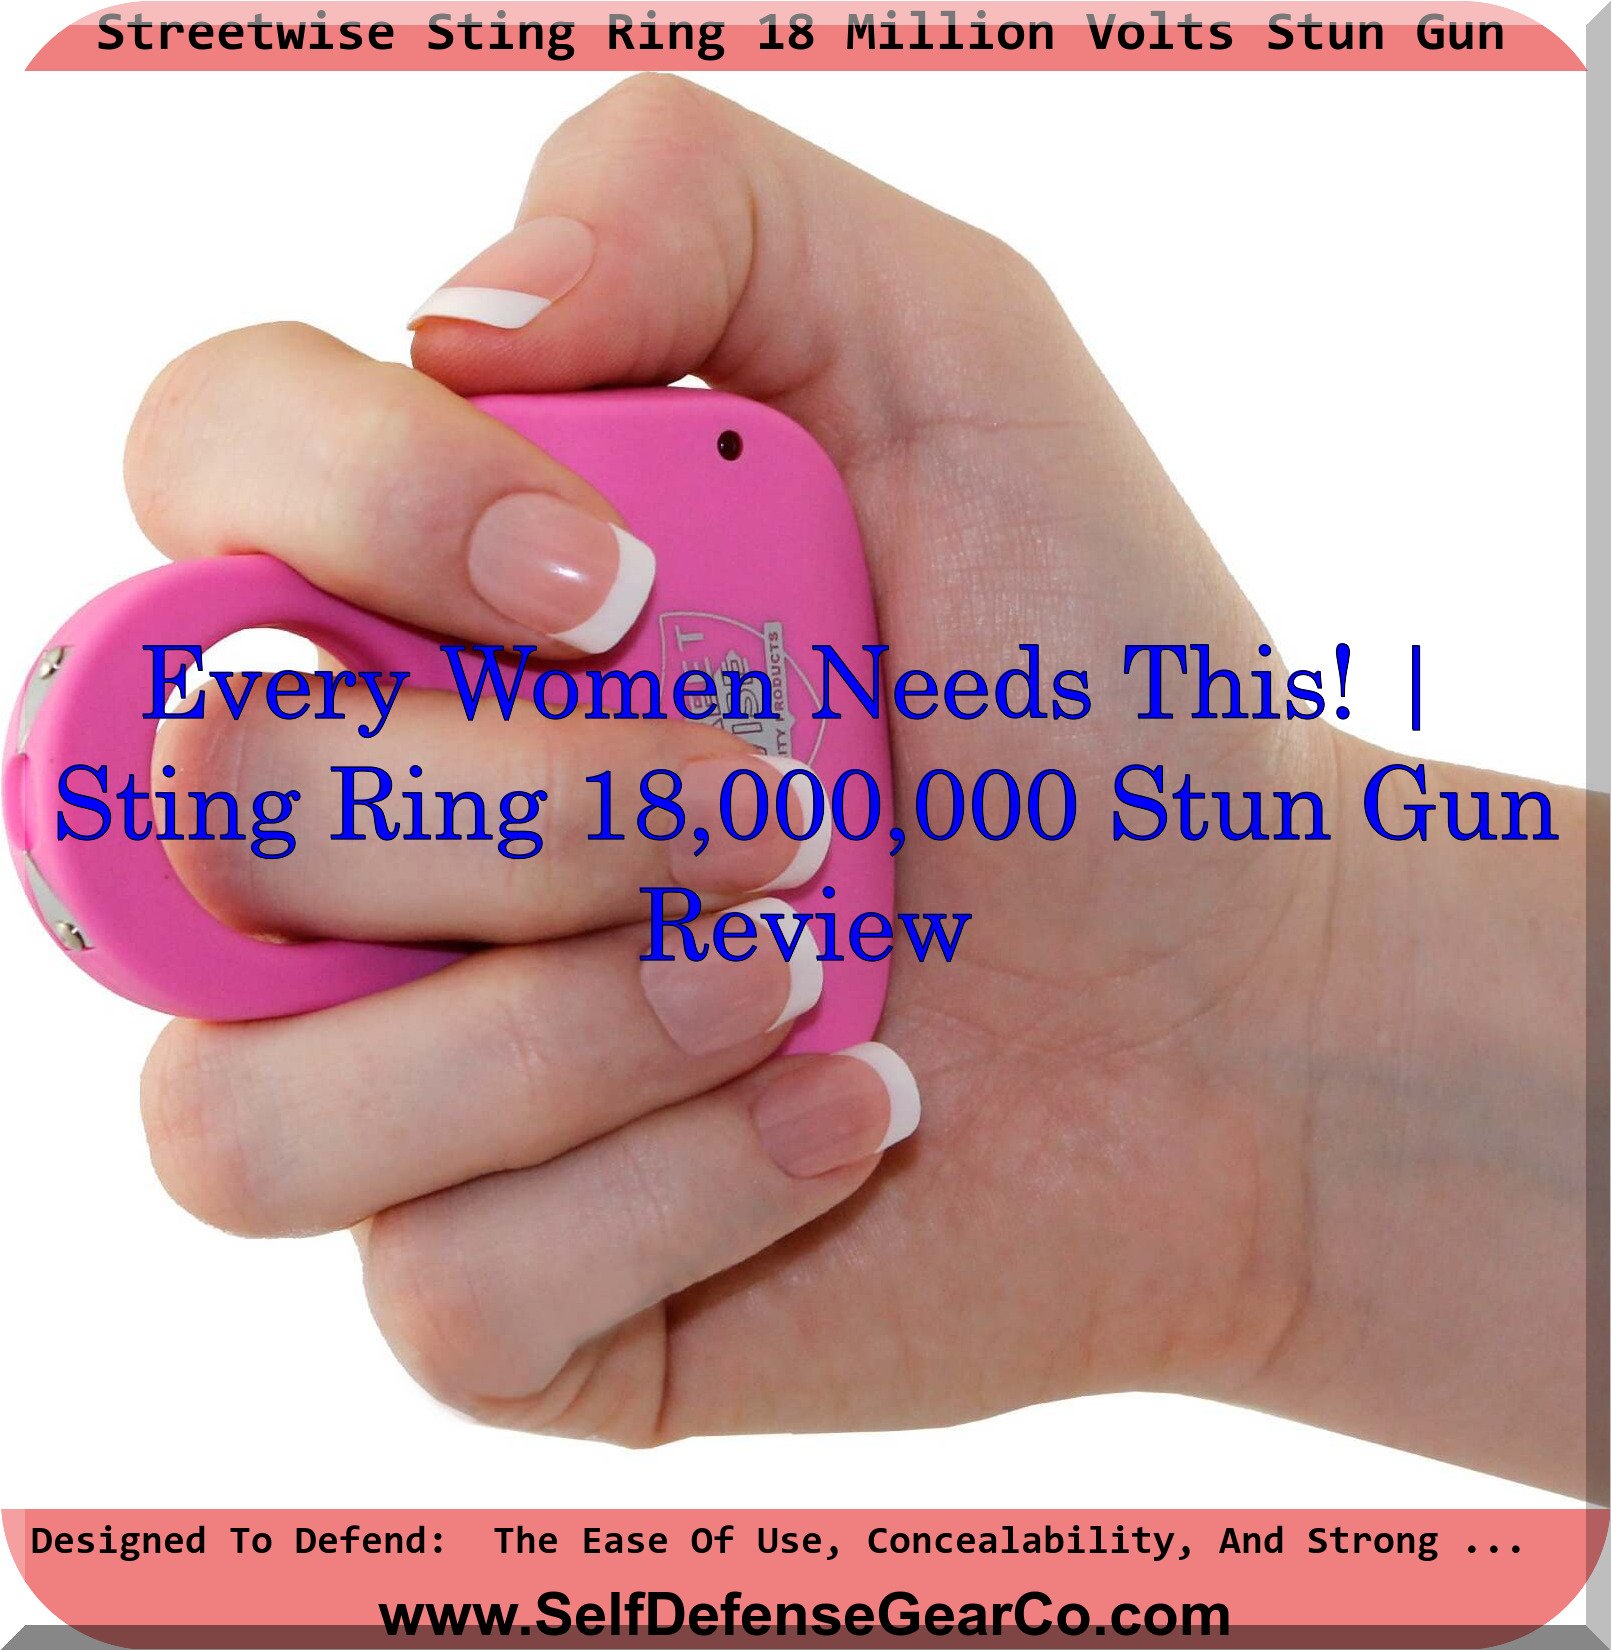 Streetwise Sting Ring 18 Million Volts Stun Gun